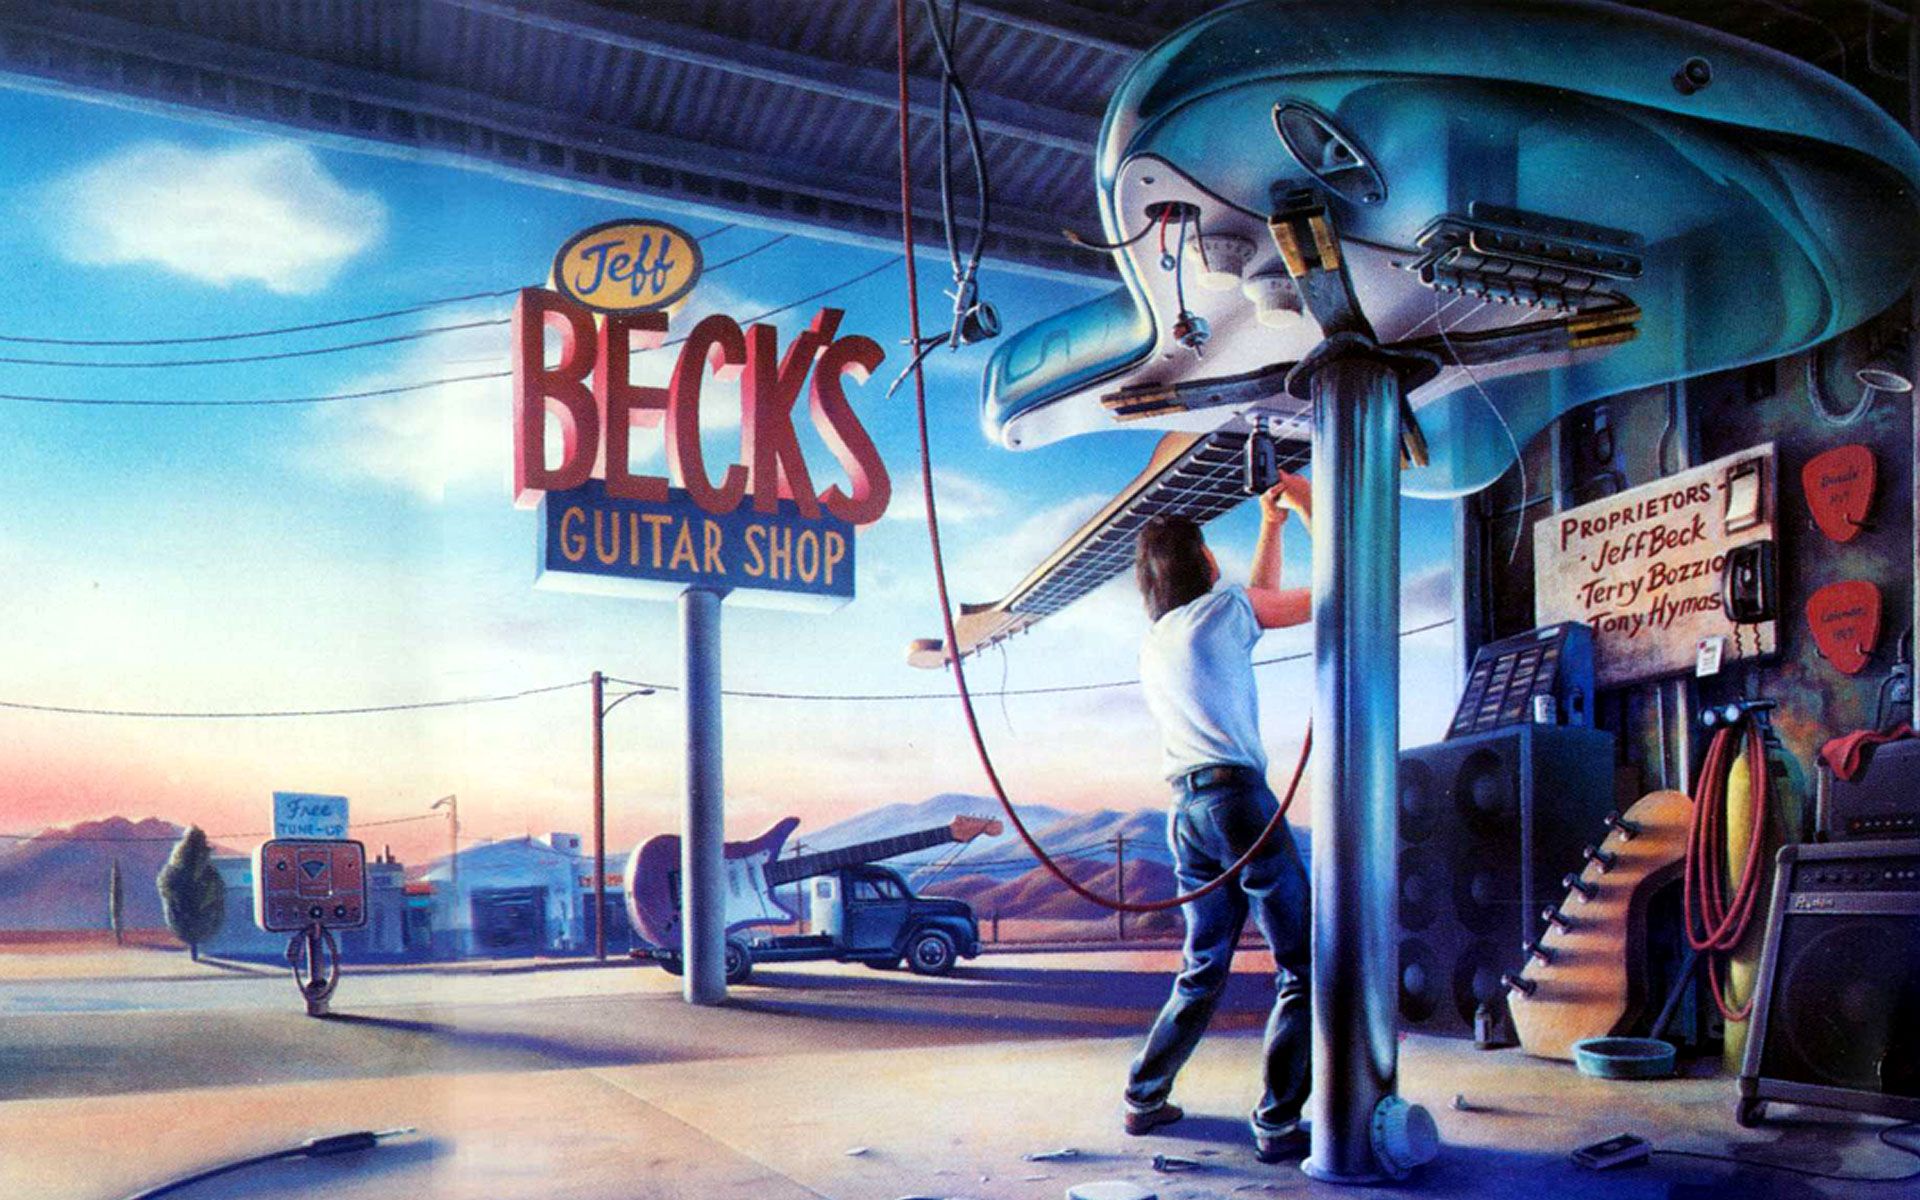 Jeff Beck's Guitar Shop Computer Wallpapers, Desktop Backgrounds ...